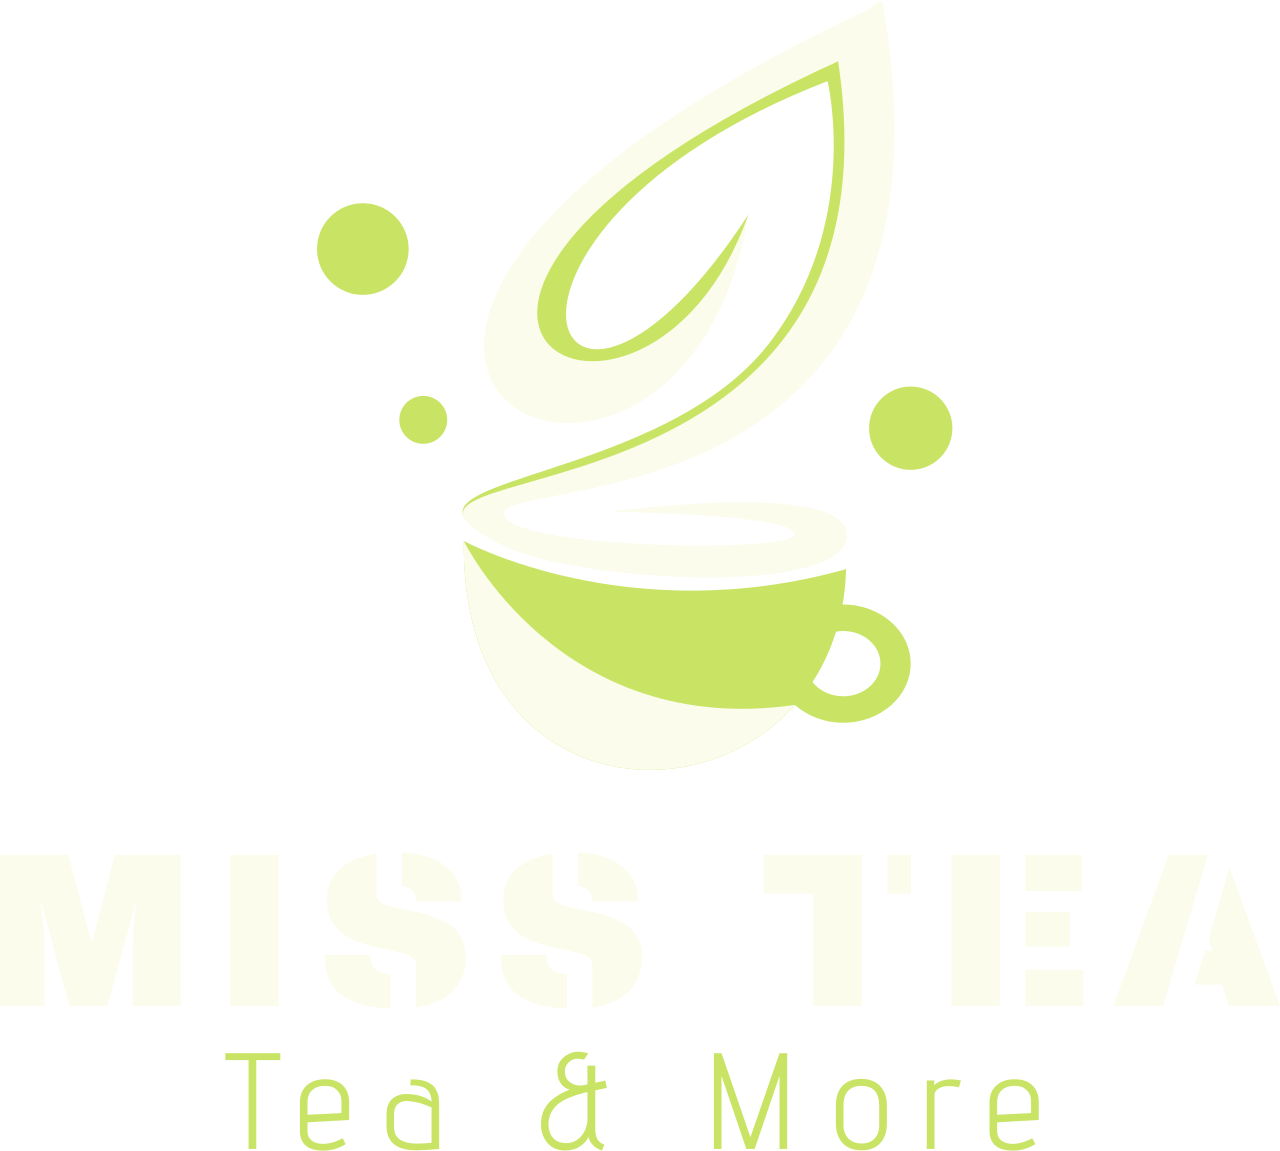 Miss Tea's web page